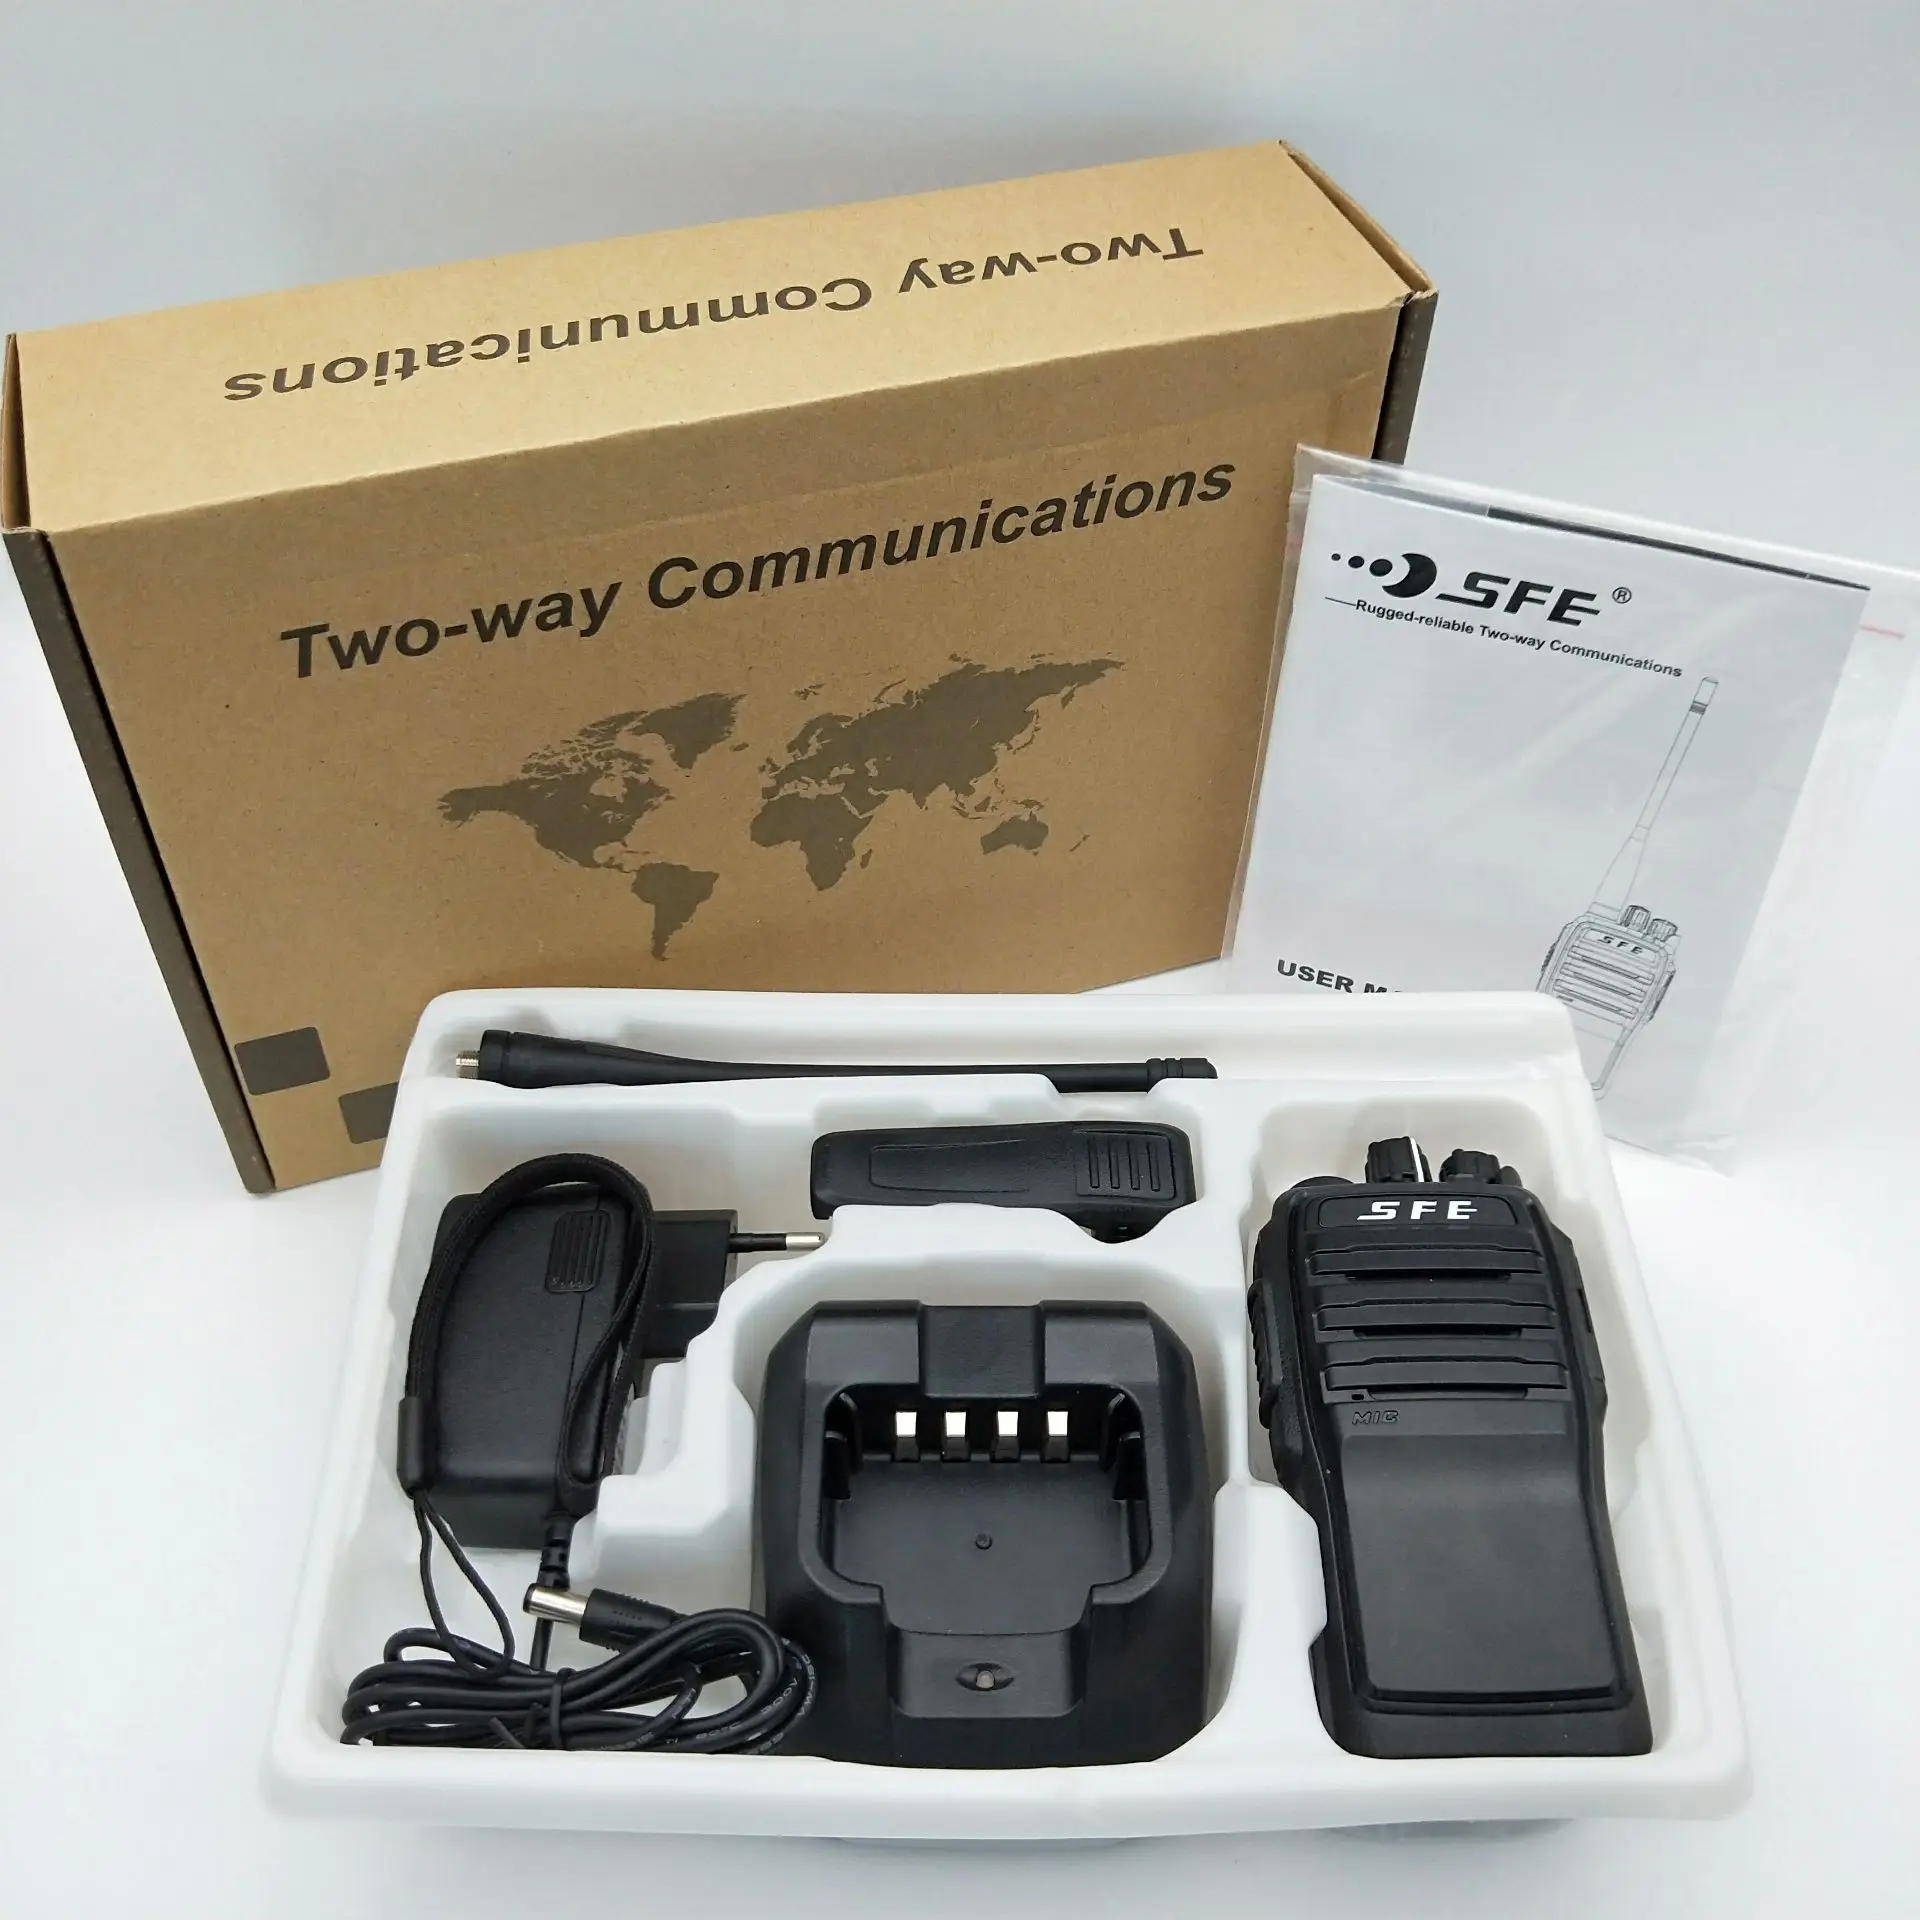 SFE S890PLUS Professional Two Way Radio with IP66